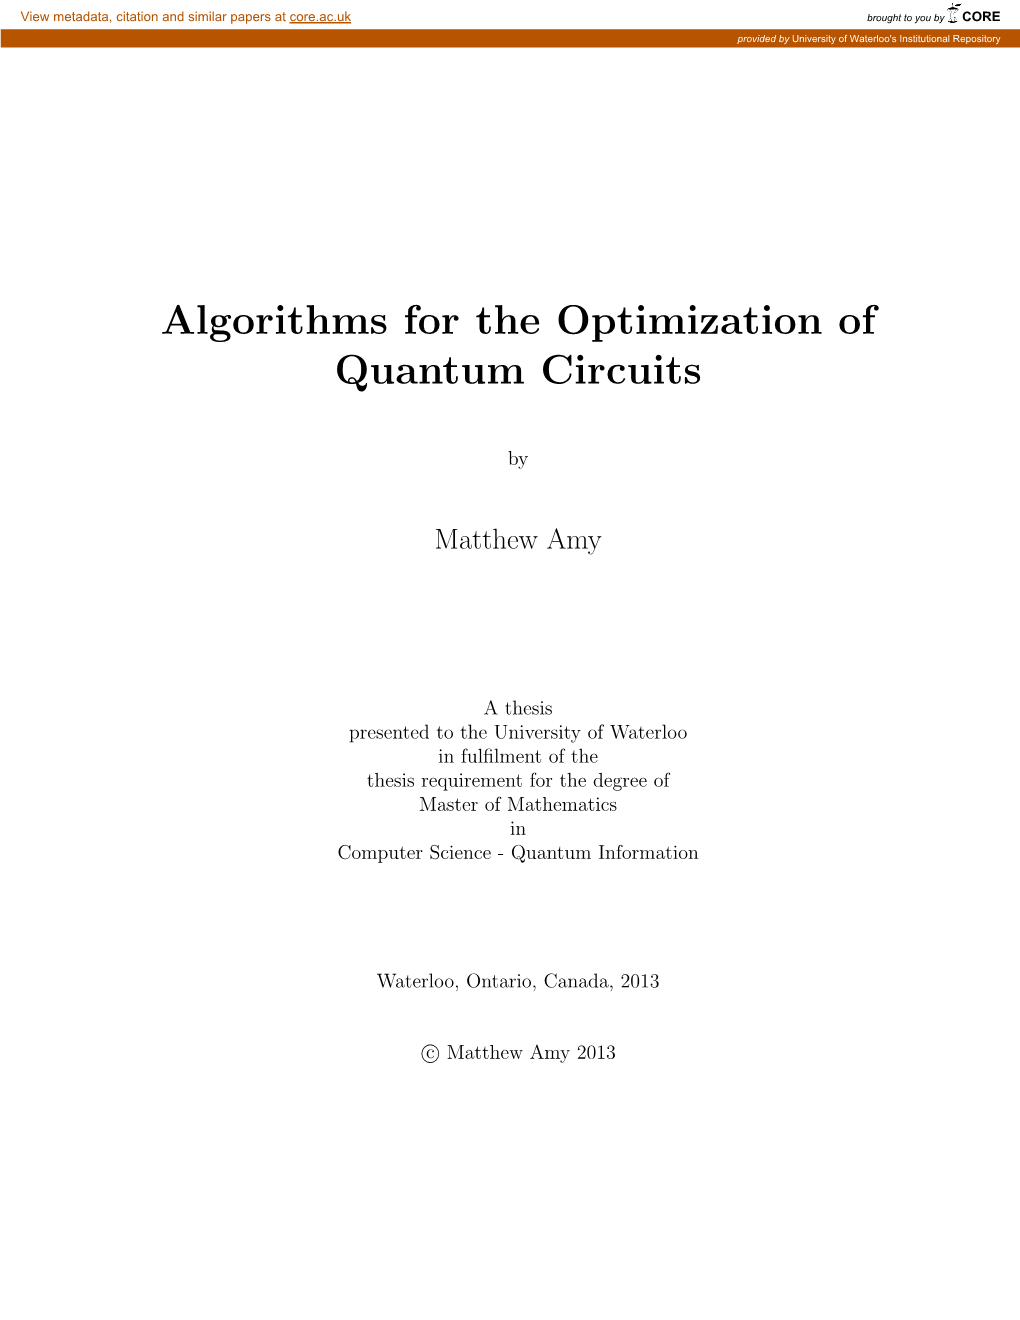 Algorithms for the Optimization of Quantum Circuits